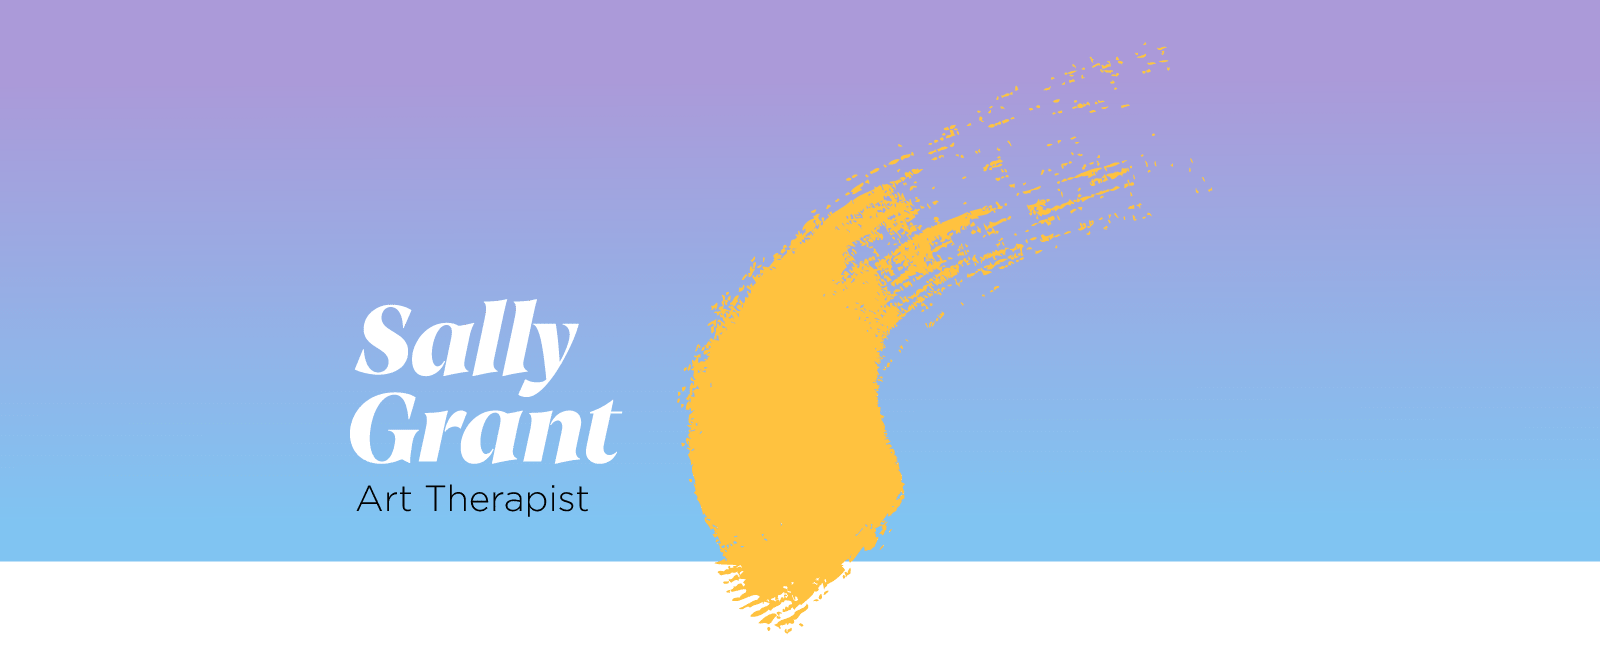 Sally Grant Art Therapist